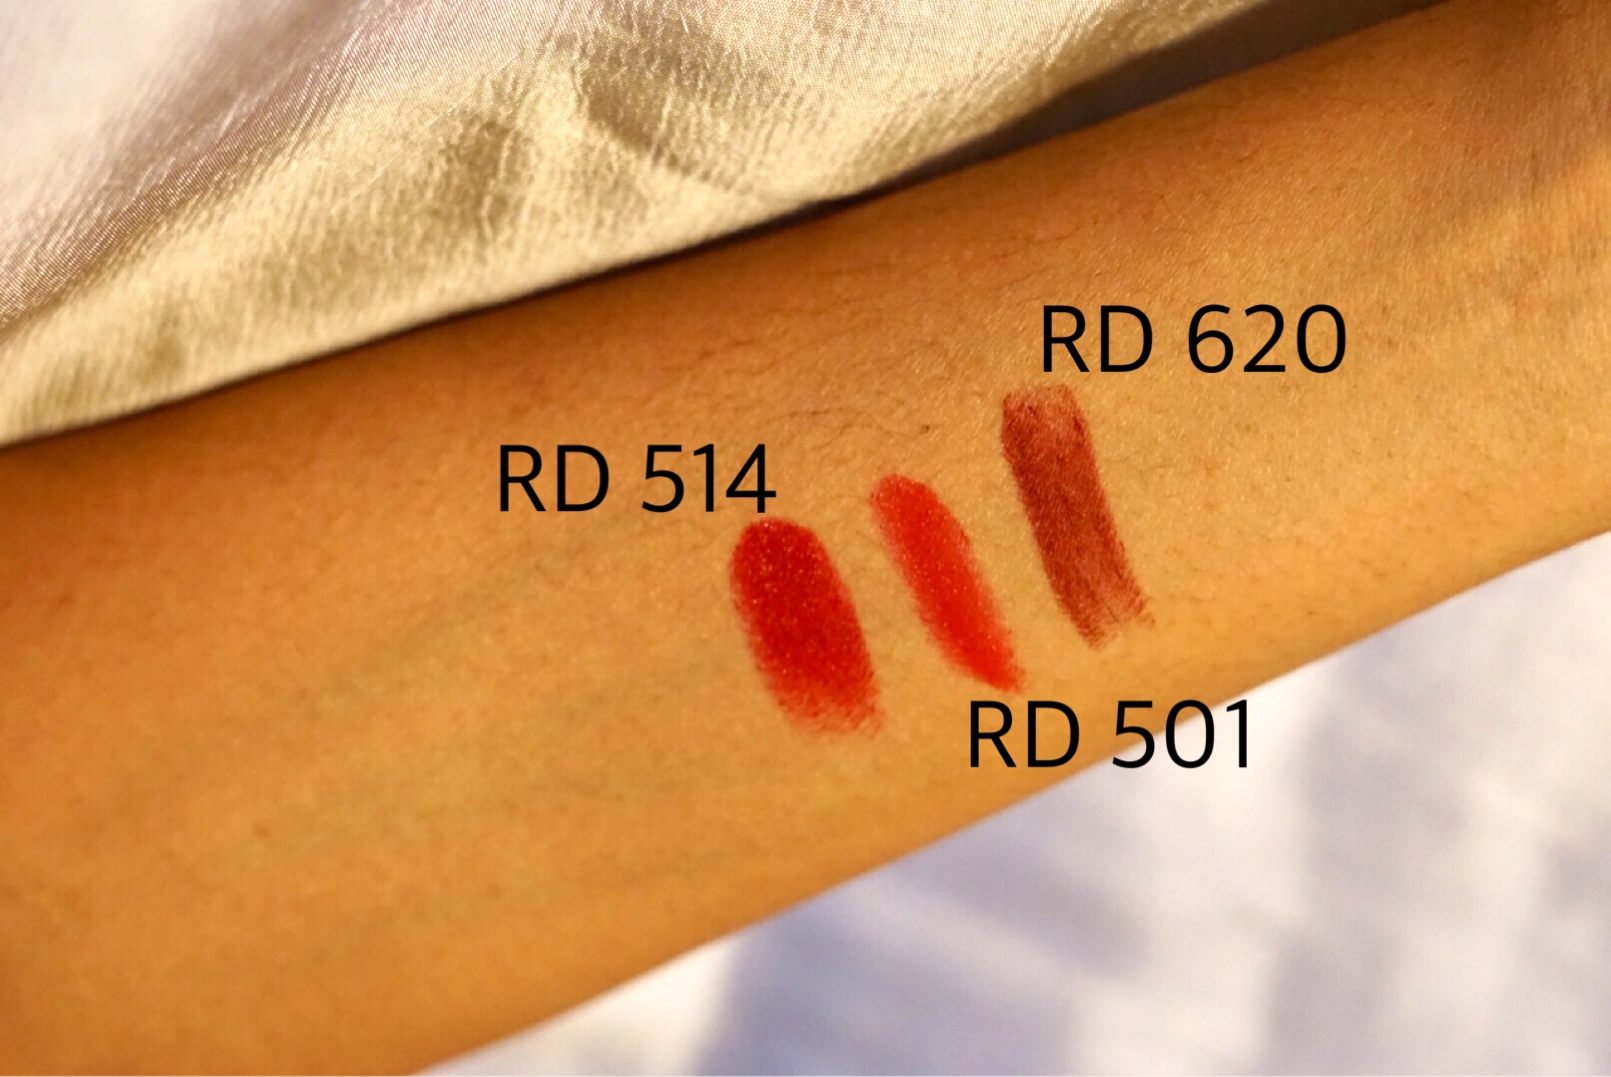 Shiseido Rouge Rouge Lipsticks Swatch